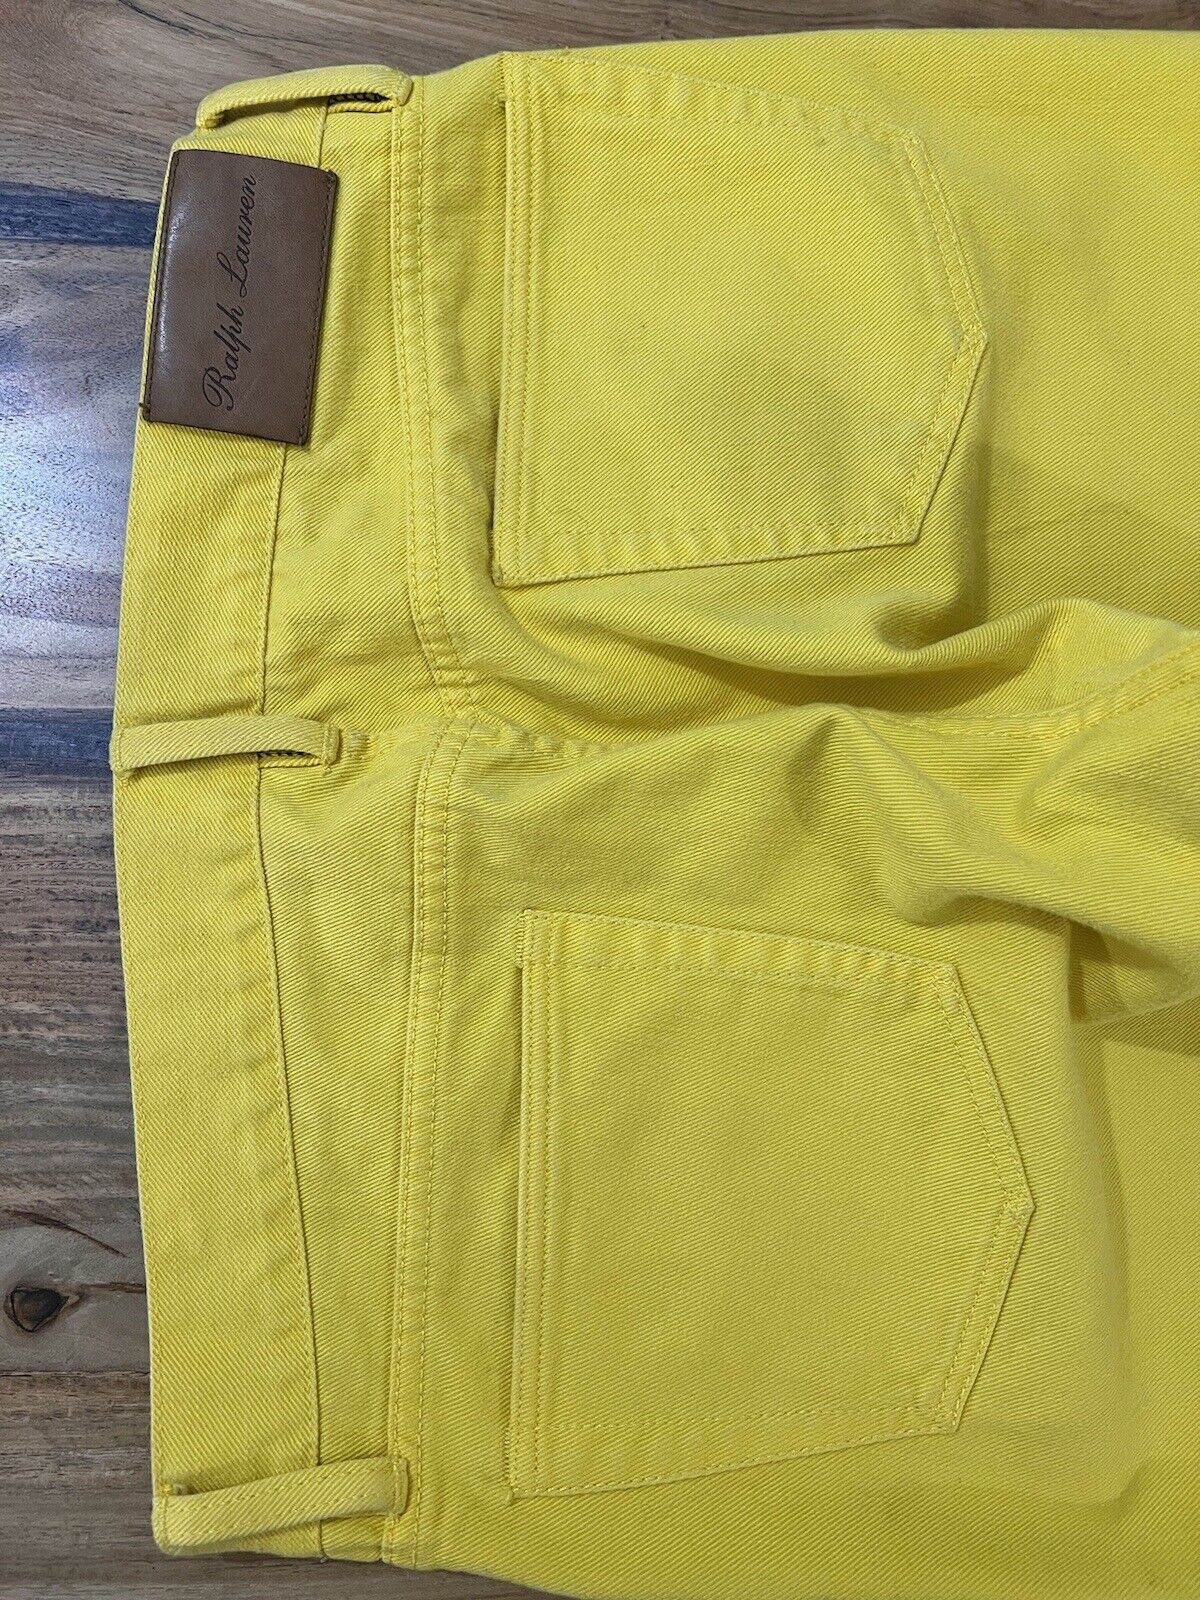 Ralph Lauren Purple Label Yellow Denim Jeans Italy - image 13